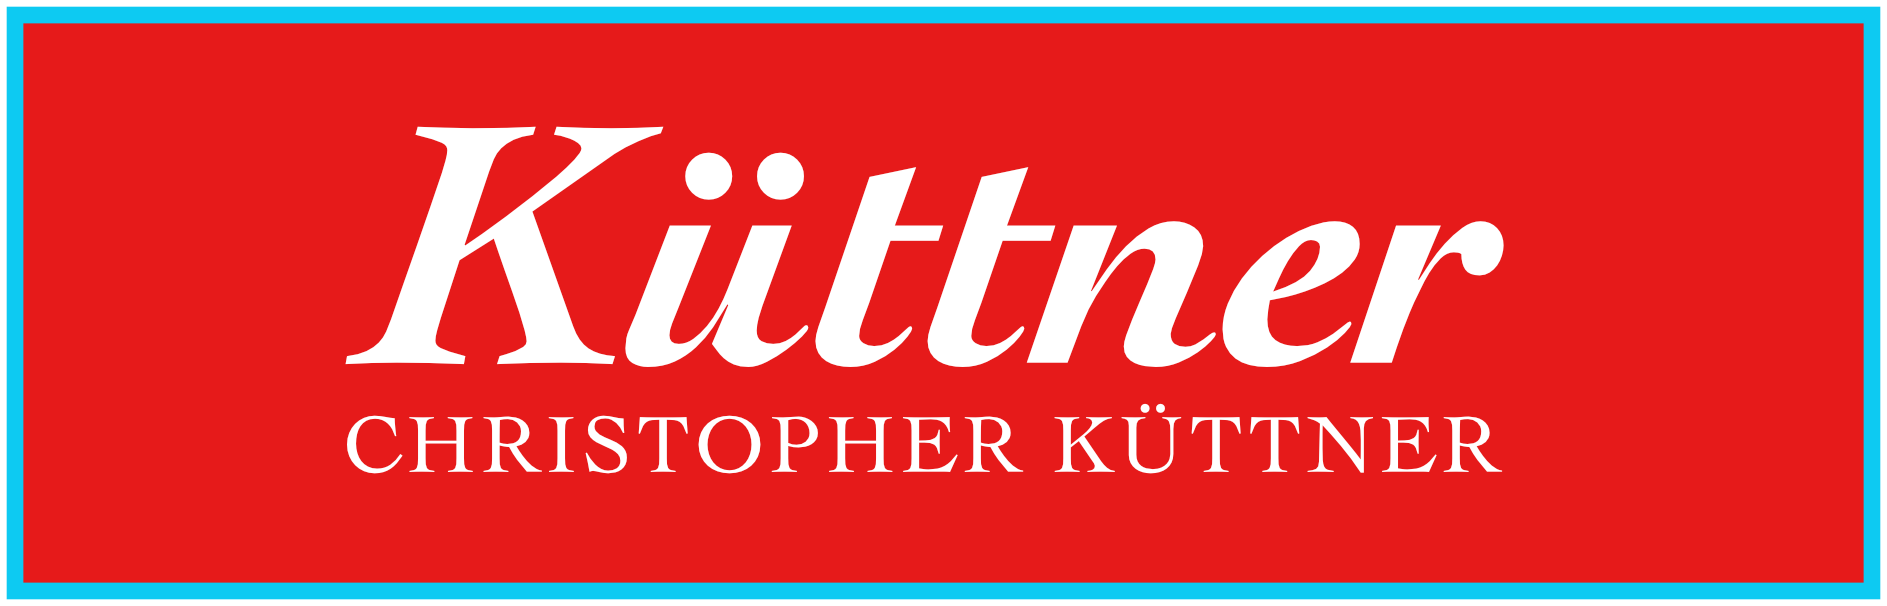 Küttner – Christopher Küttner